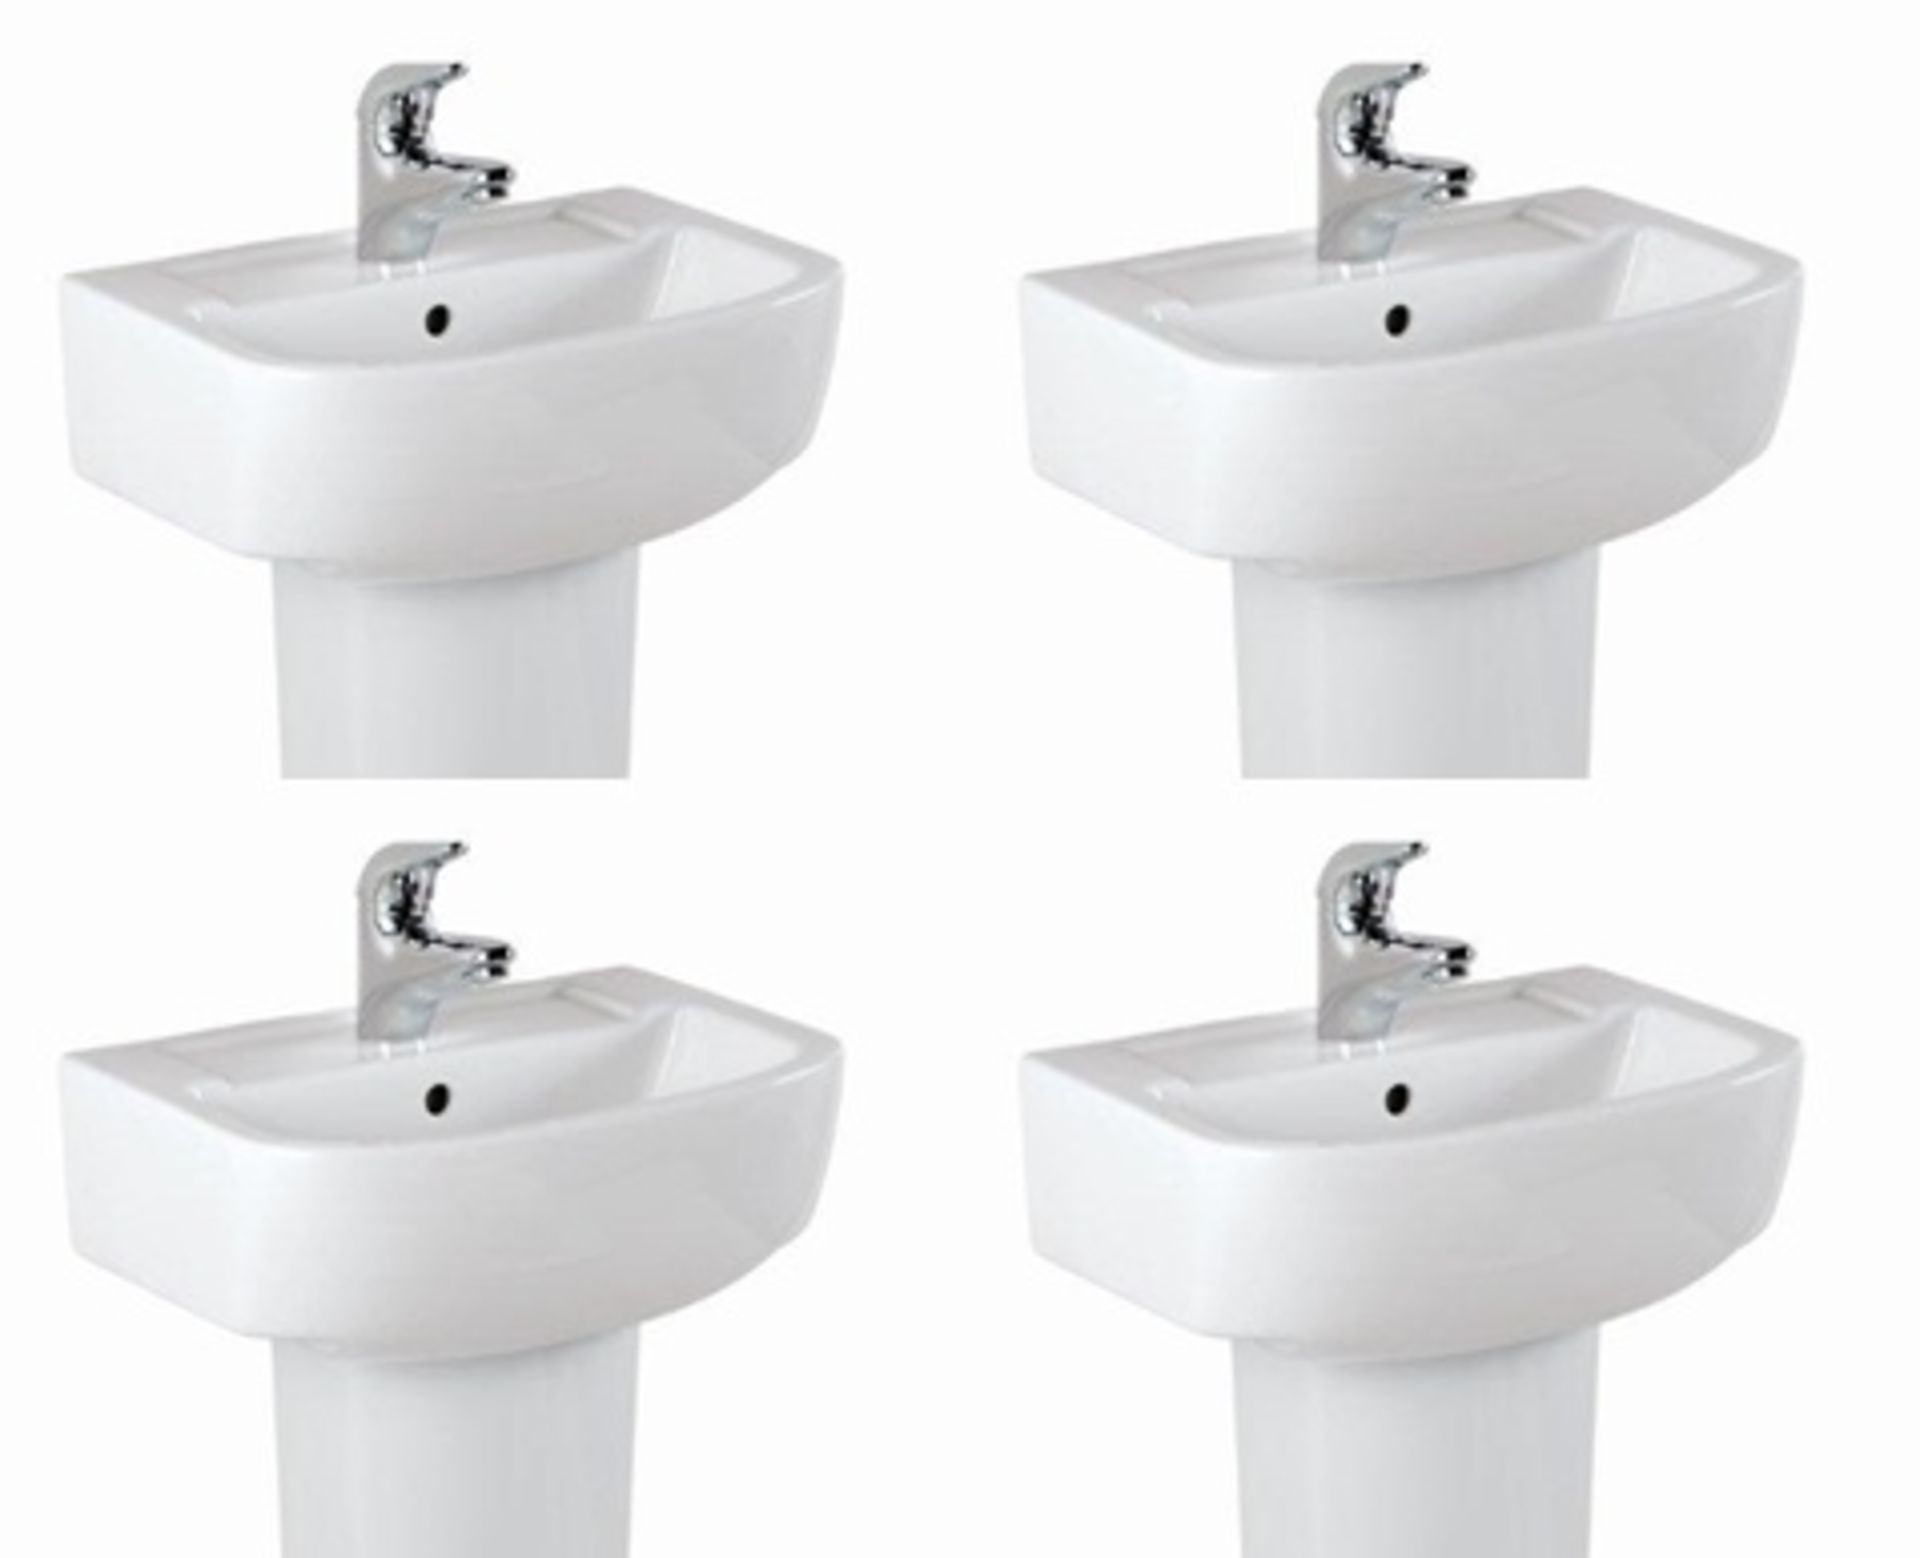 4 x Vogue Bathrooms ZERO Single Tap Hole SINK BASINS With Semi Pedestals - 450mm Width - Brand New